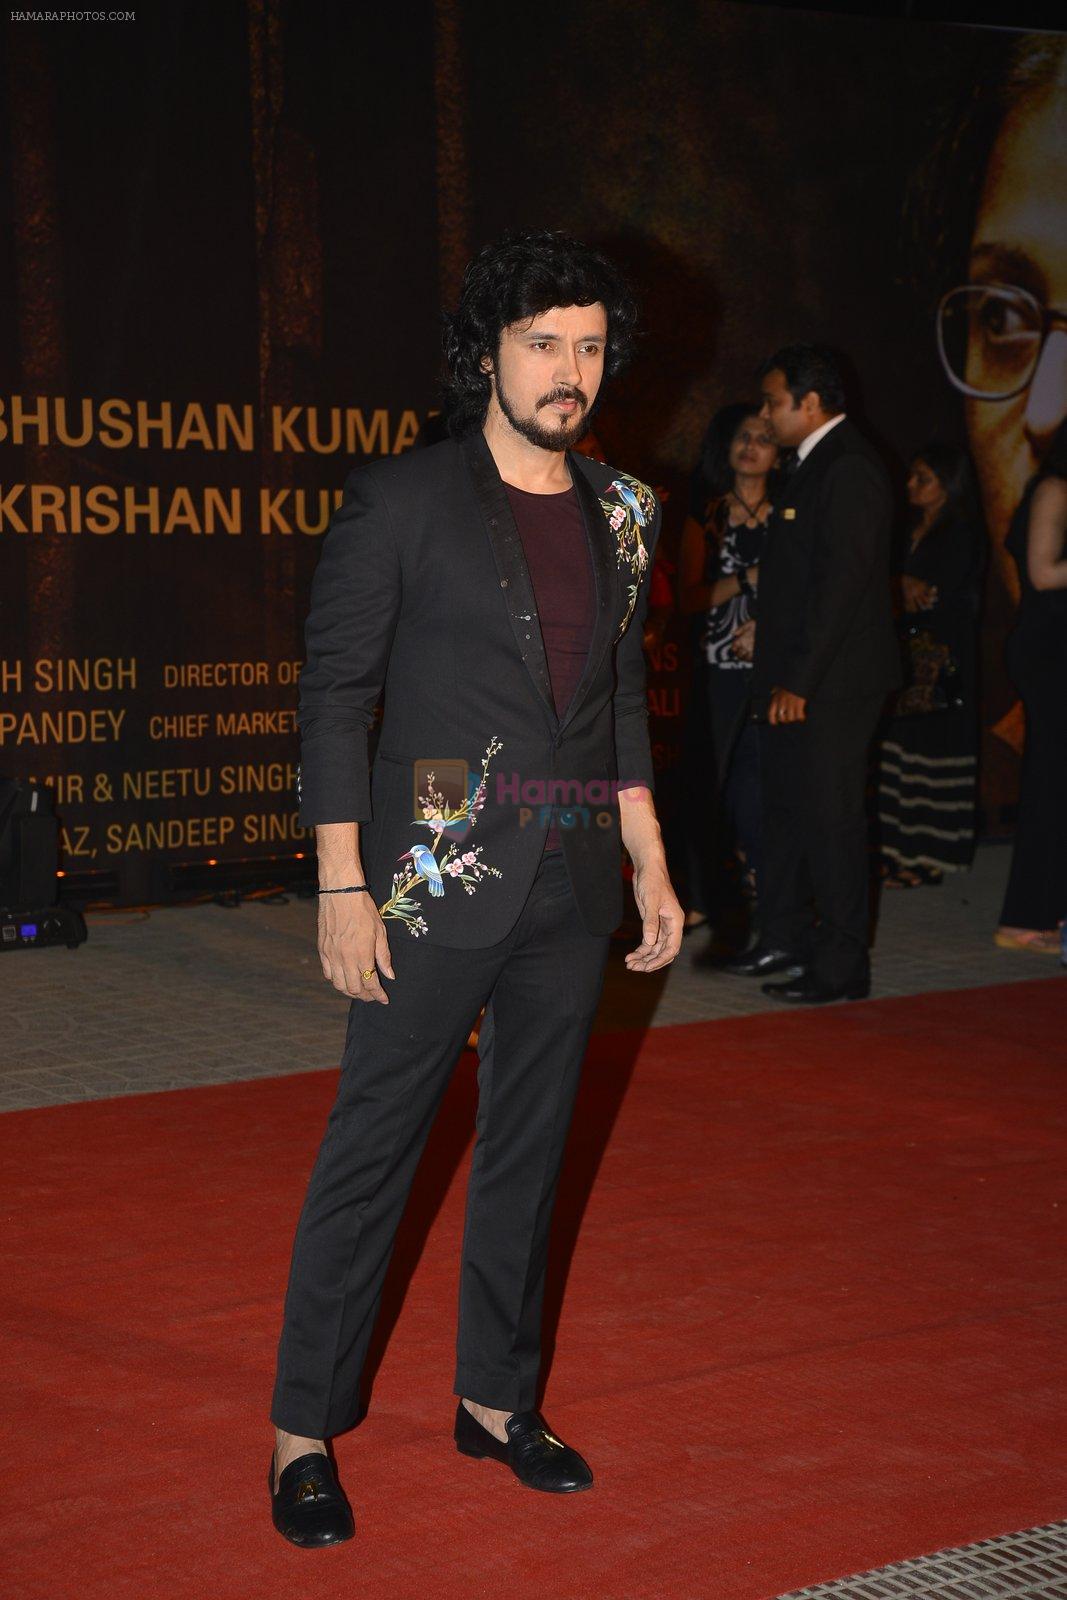 Darshan Kumaar at Sarbjit Premiere in Mumbai on 18th May 2016